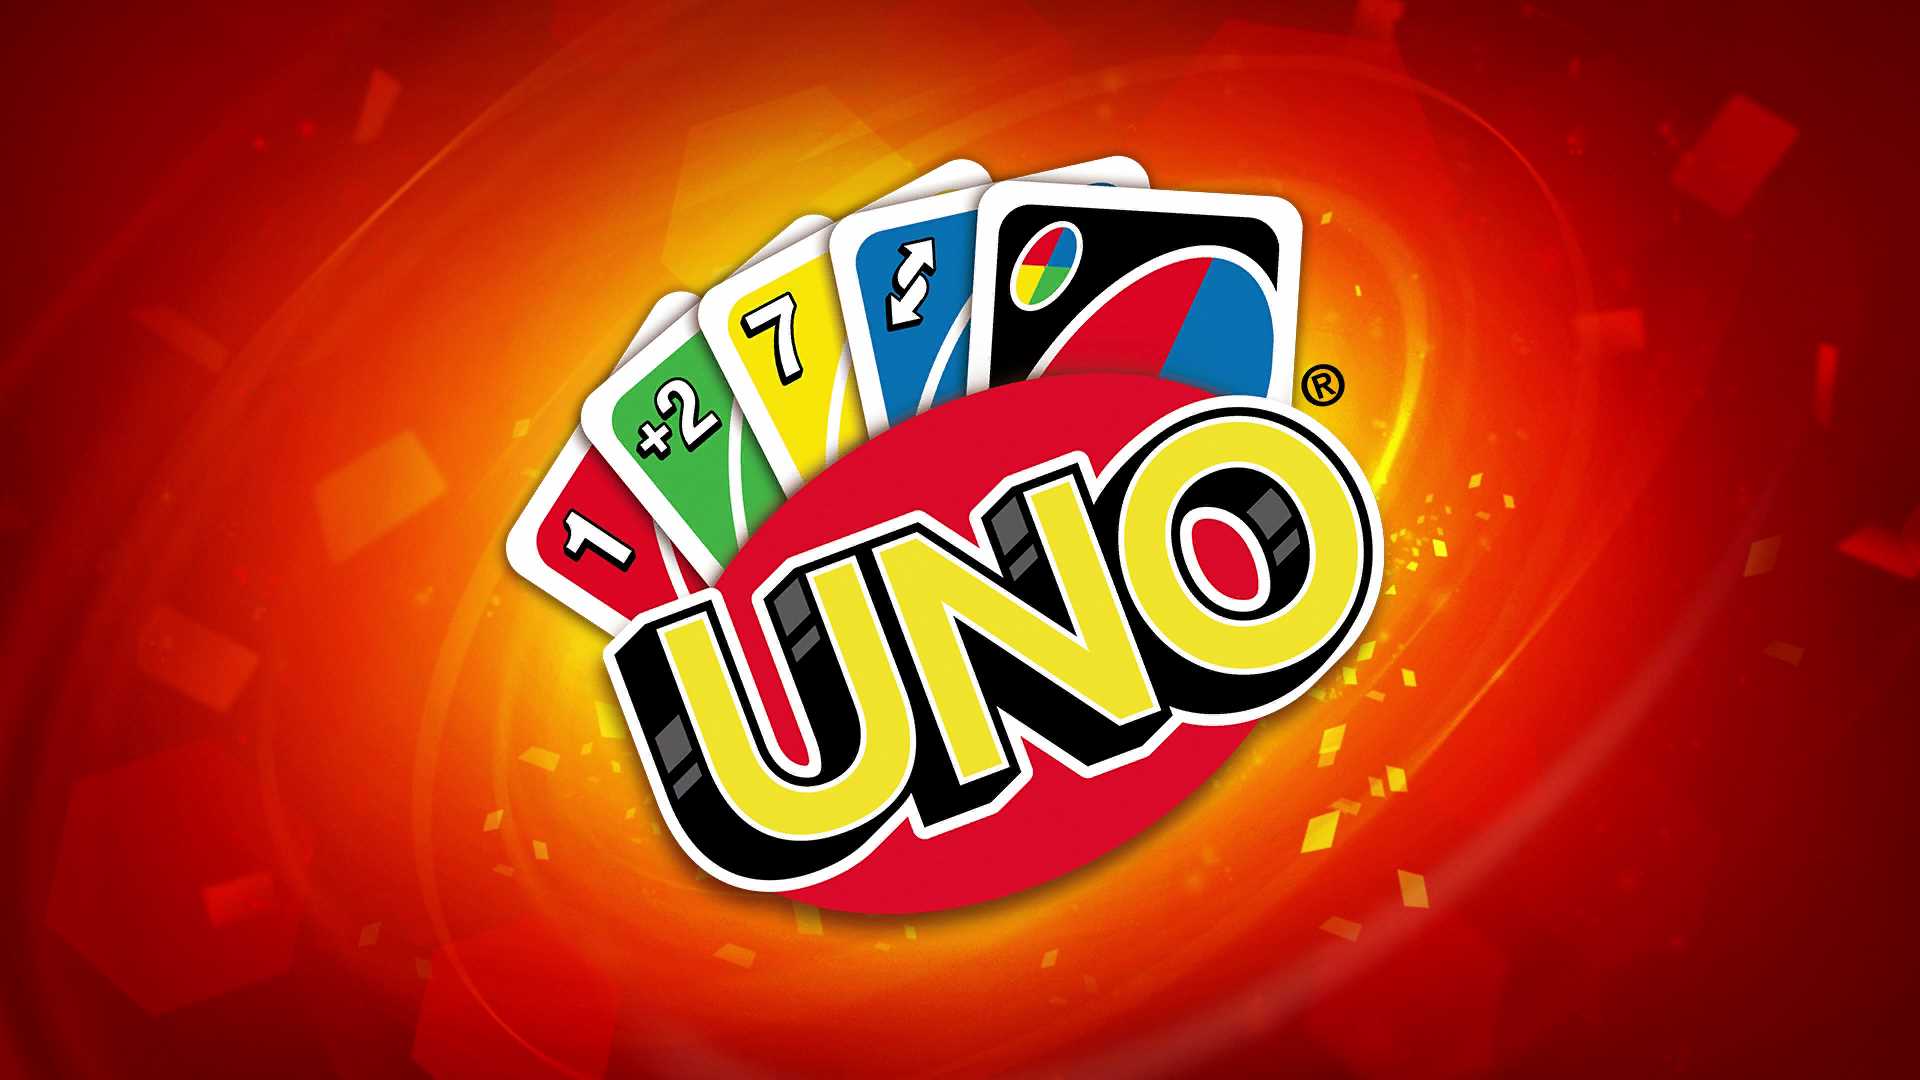 UNO Ultimate Edition